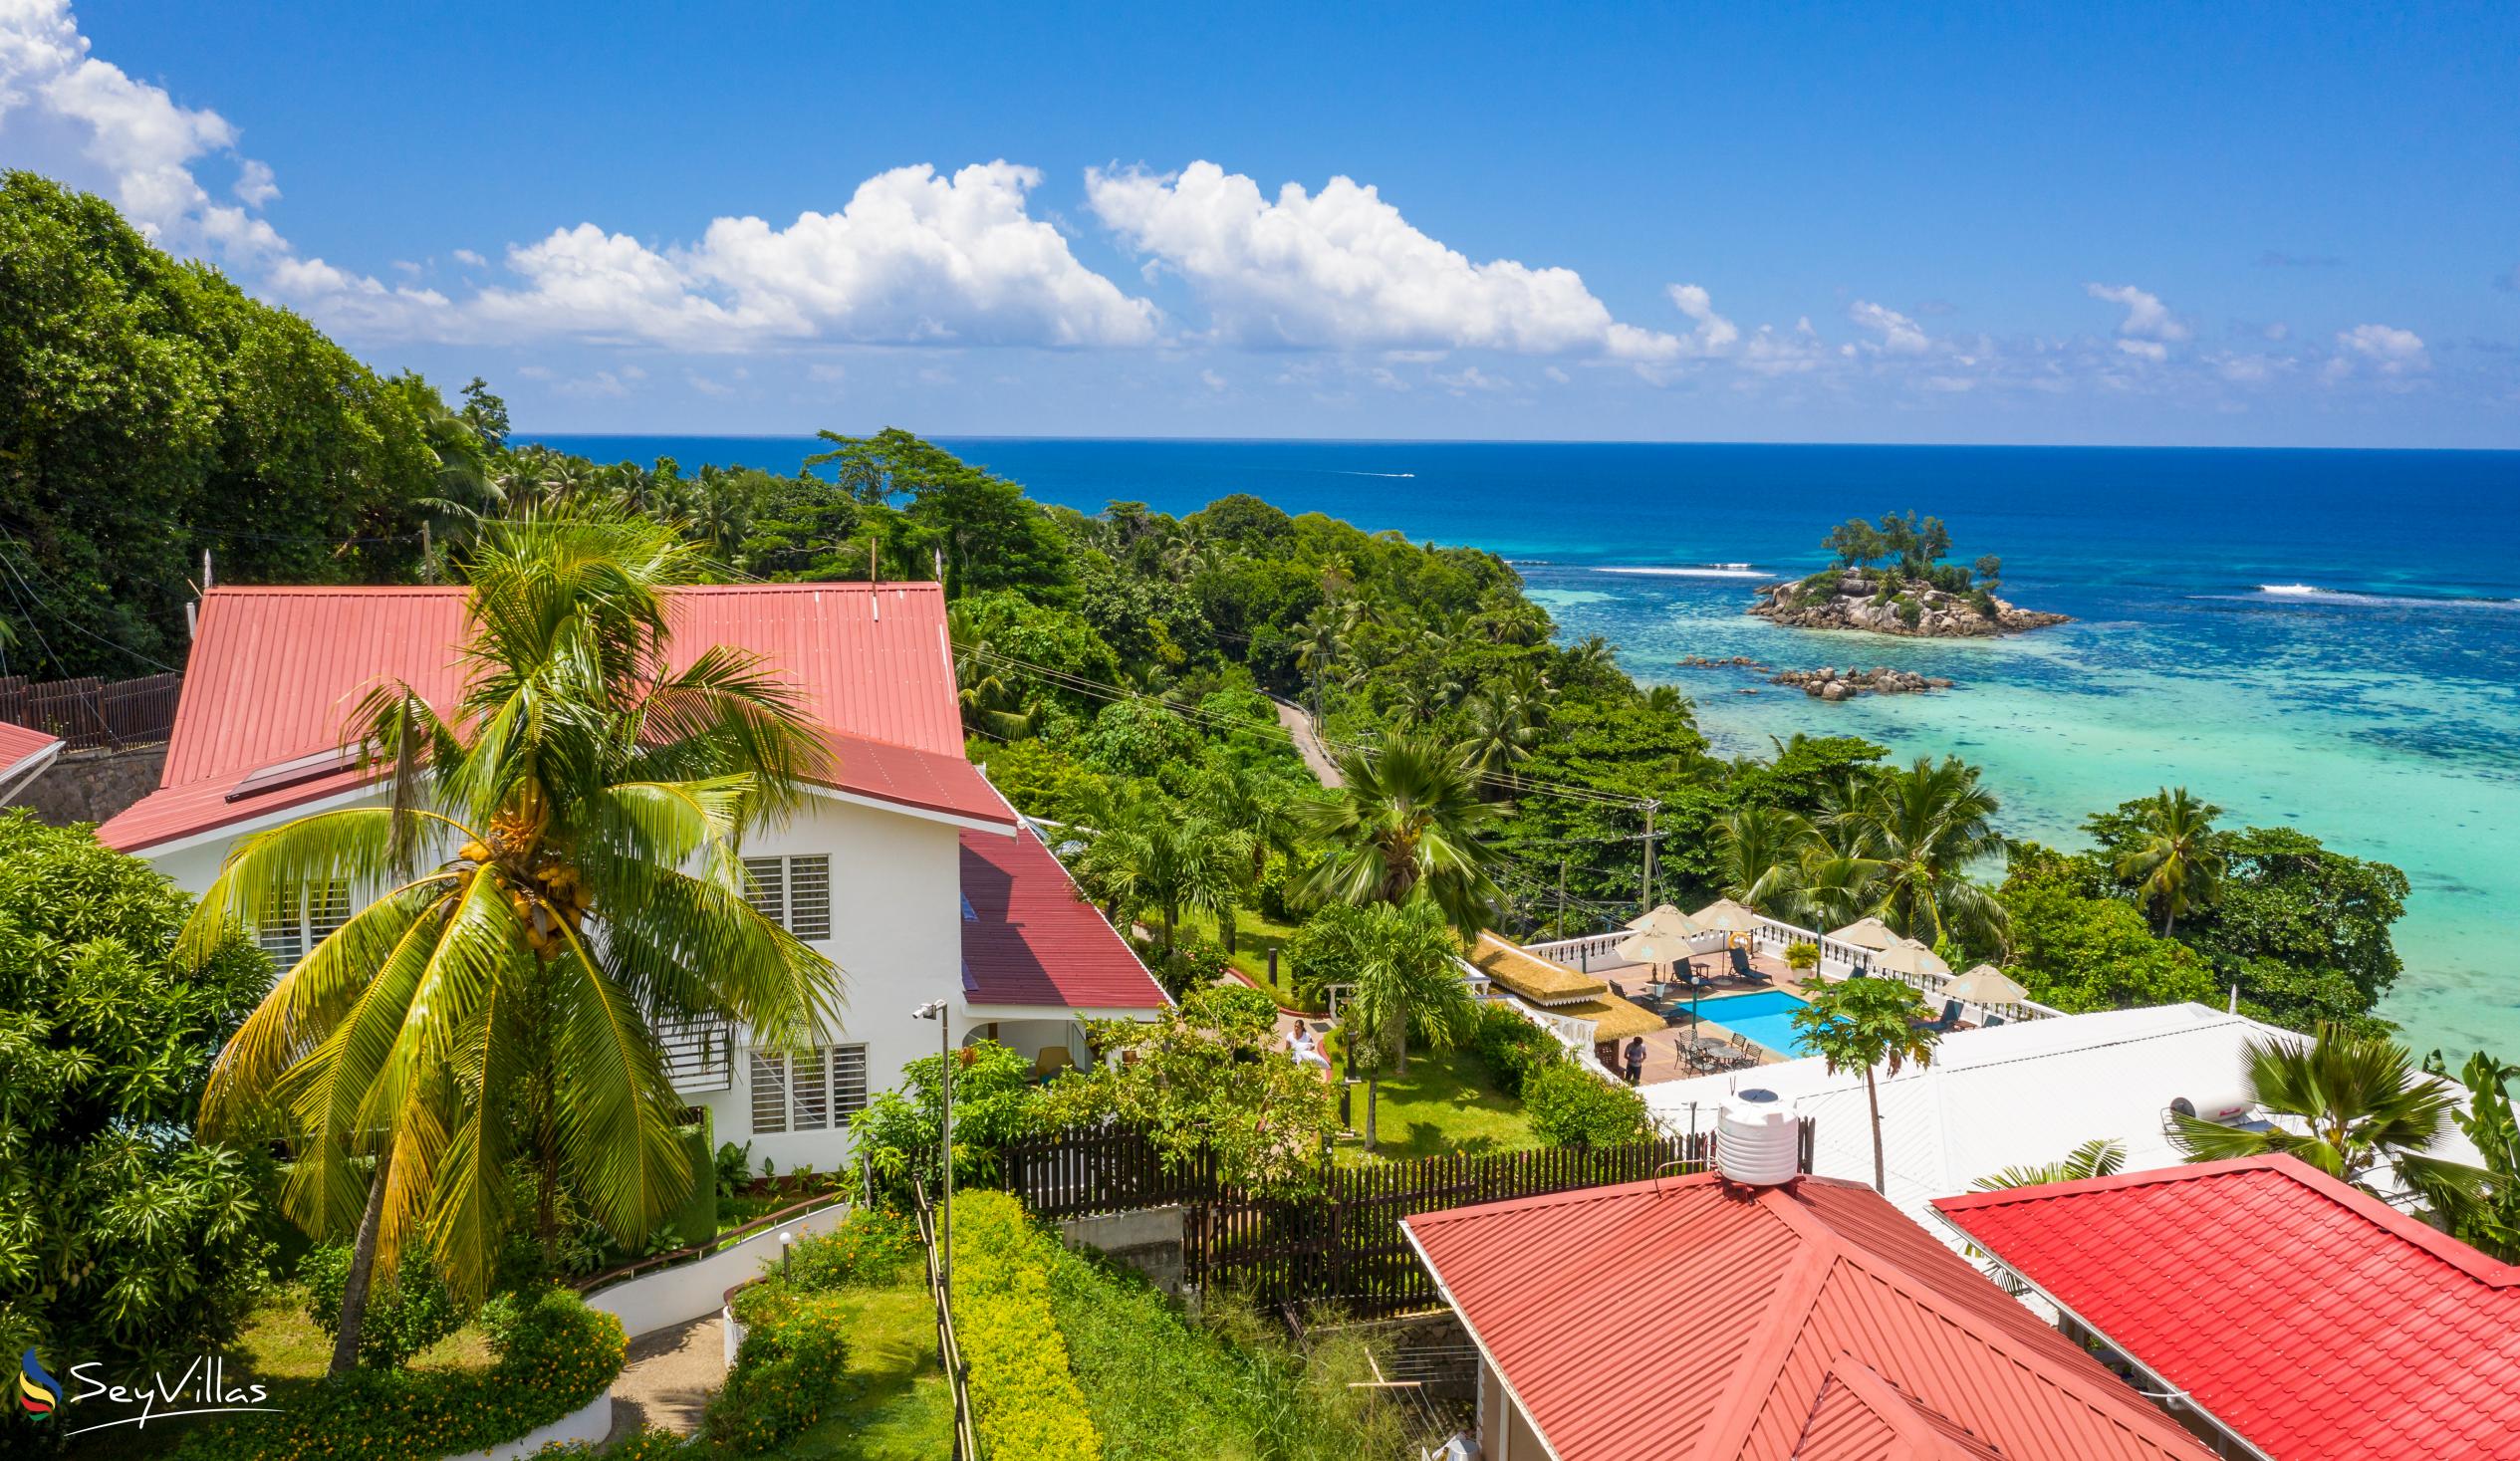 Foto 1: Le Relax Hotel & Restaurant - Aussenbereich - Mahé (Seychellen)